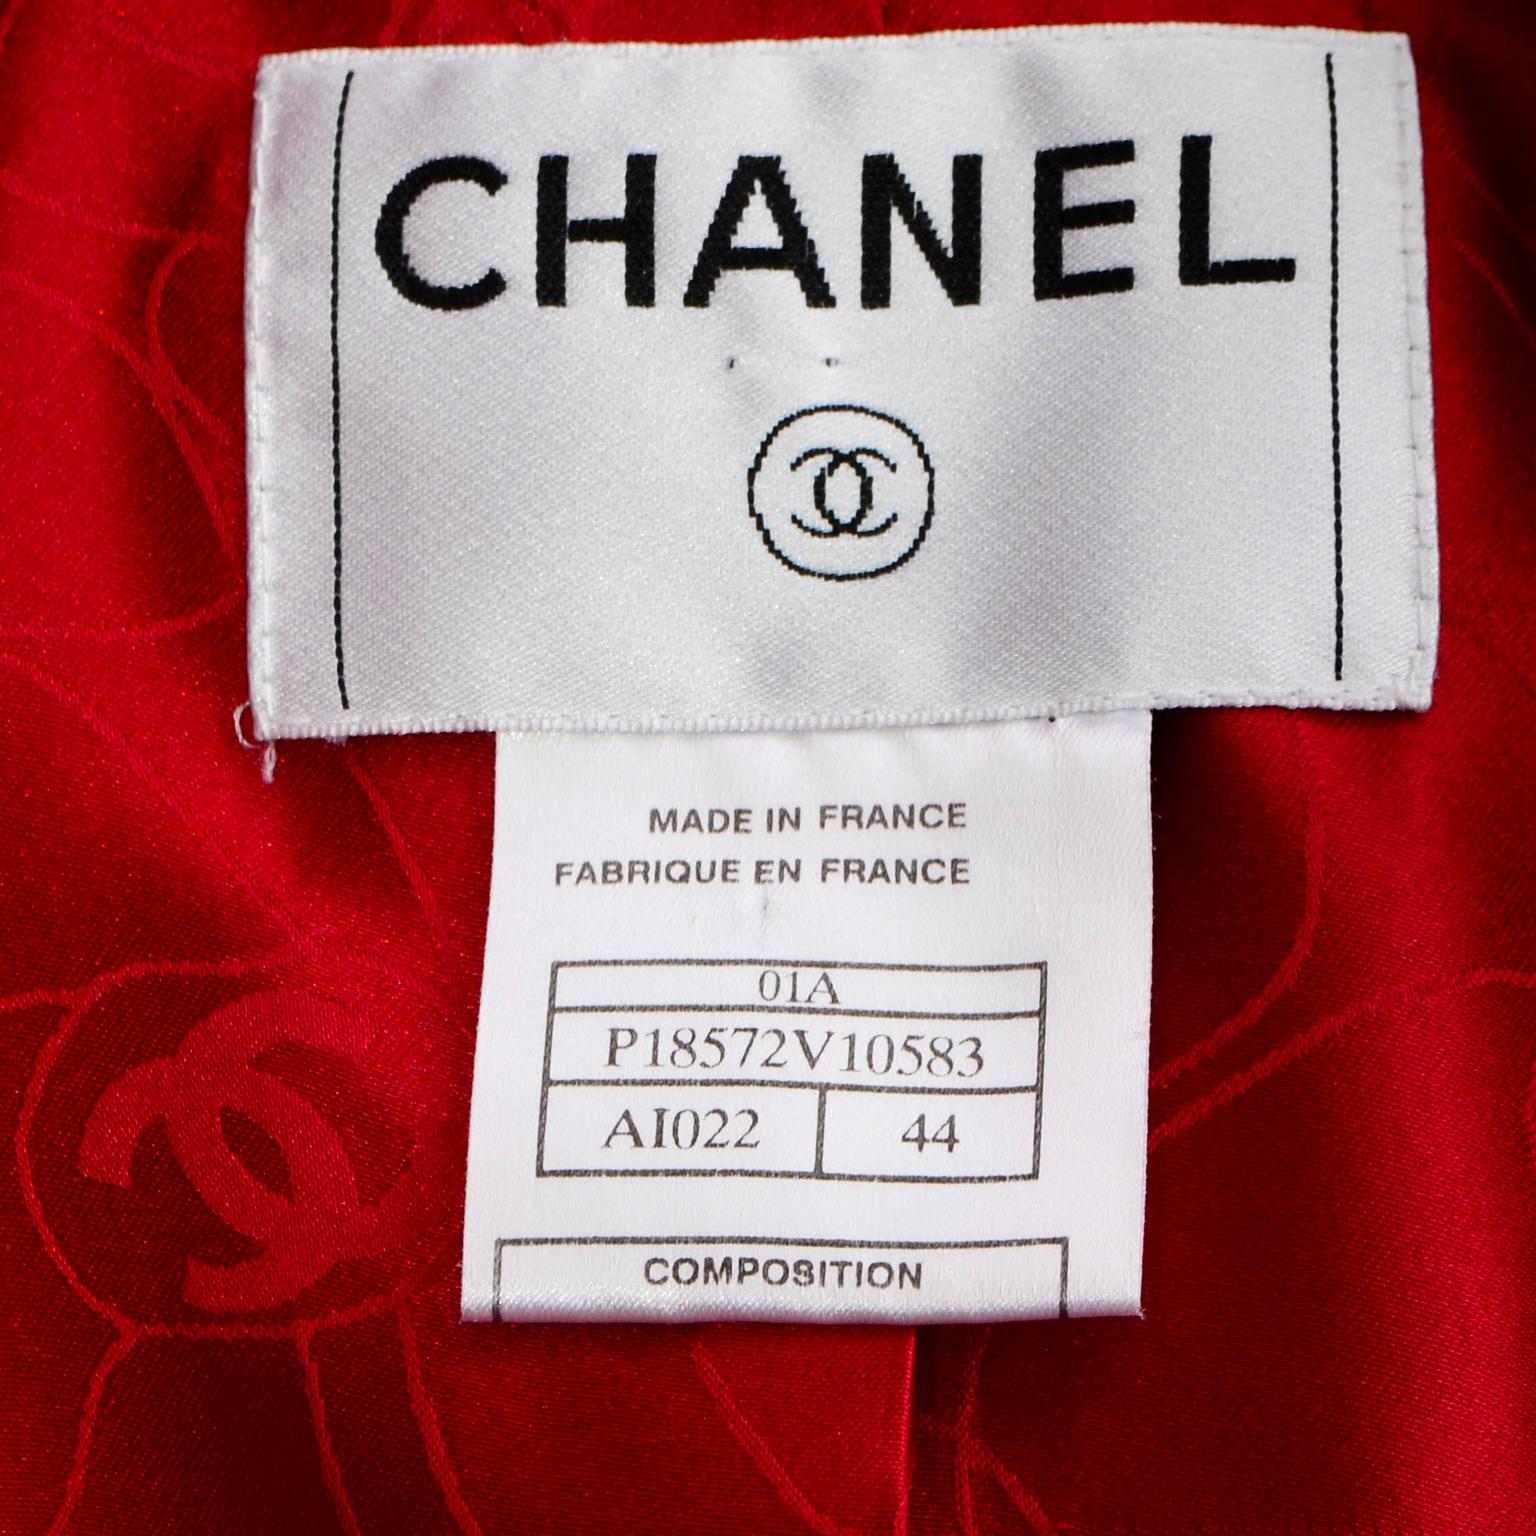 2001 Red Wool Blend Chanel Blazer Jacket W Notch Collar and CC Button Closure 7